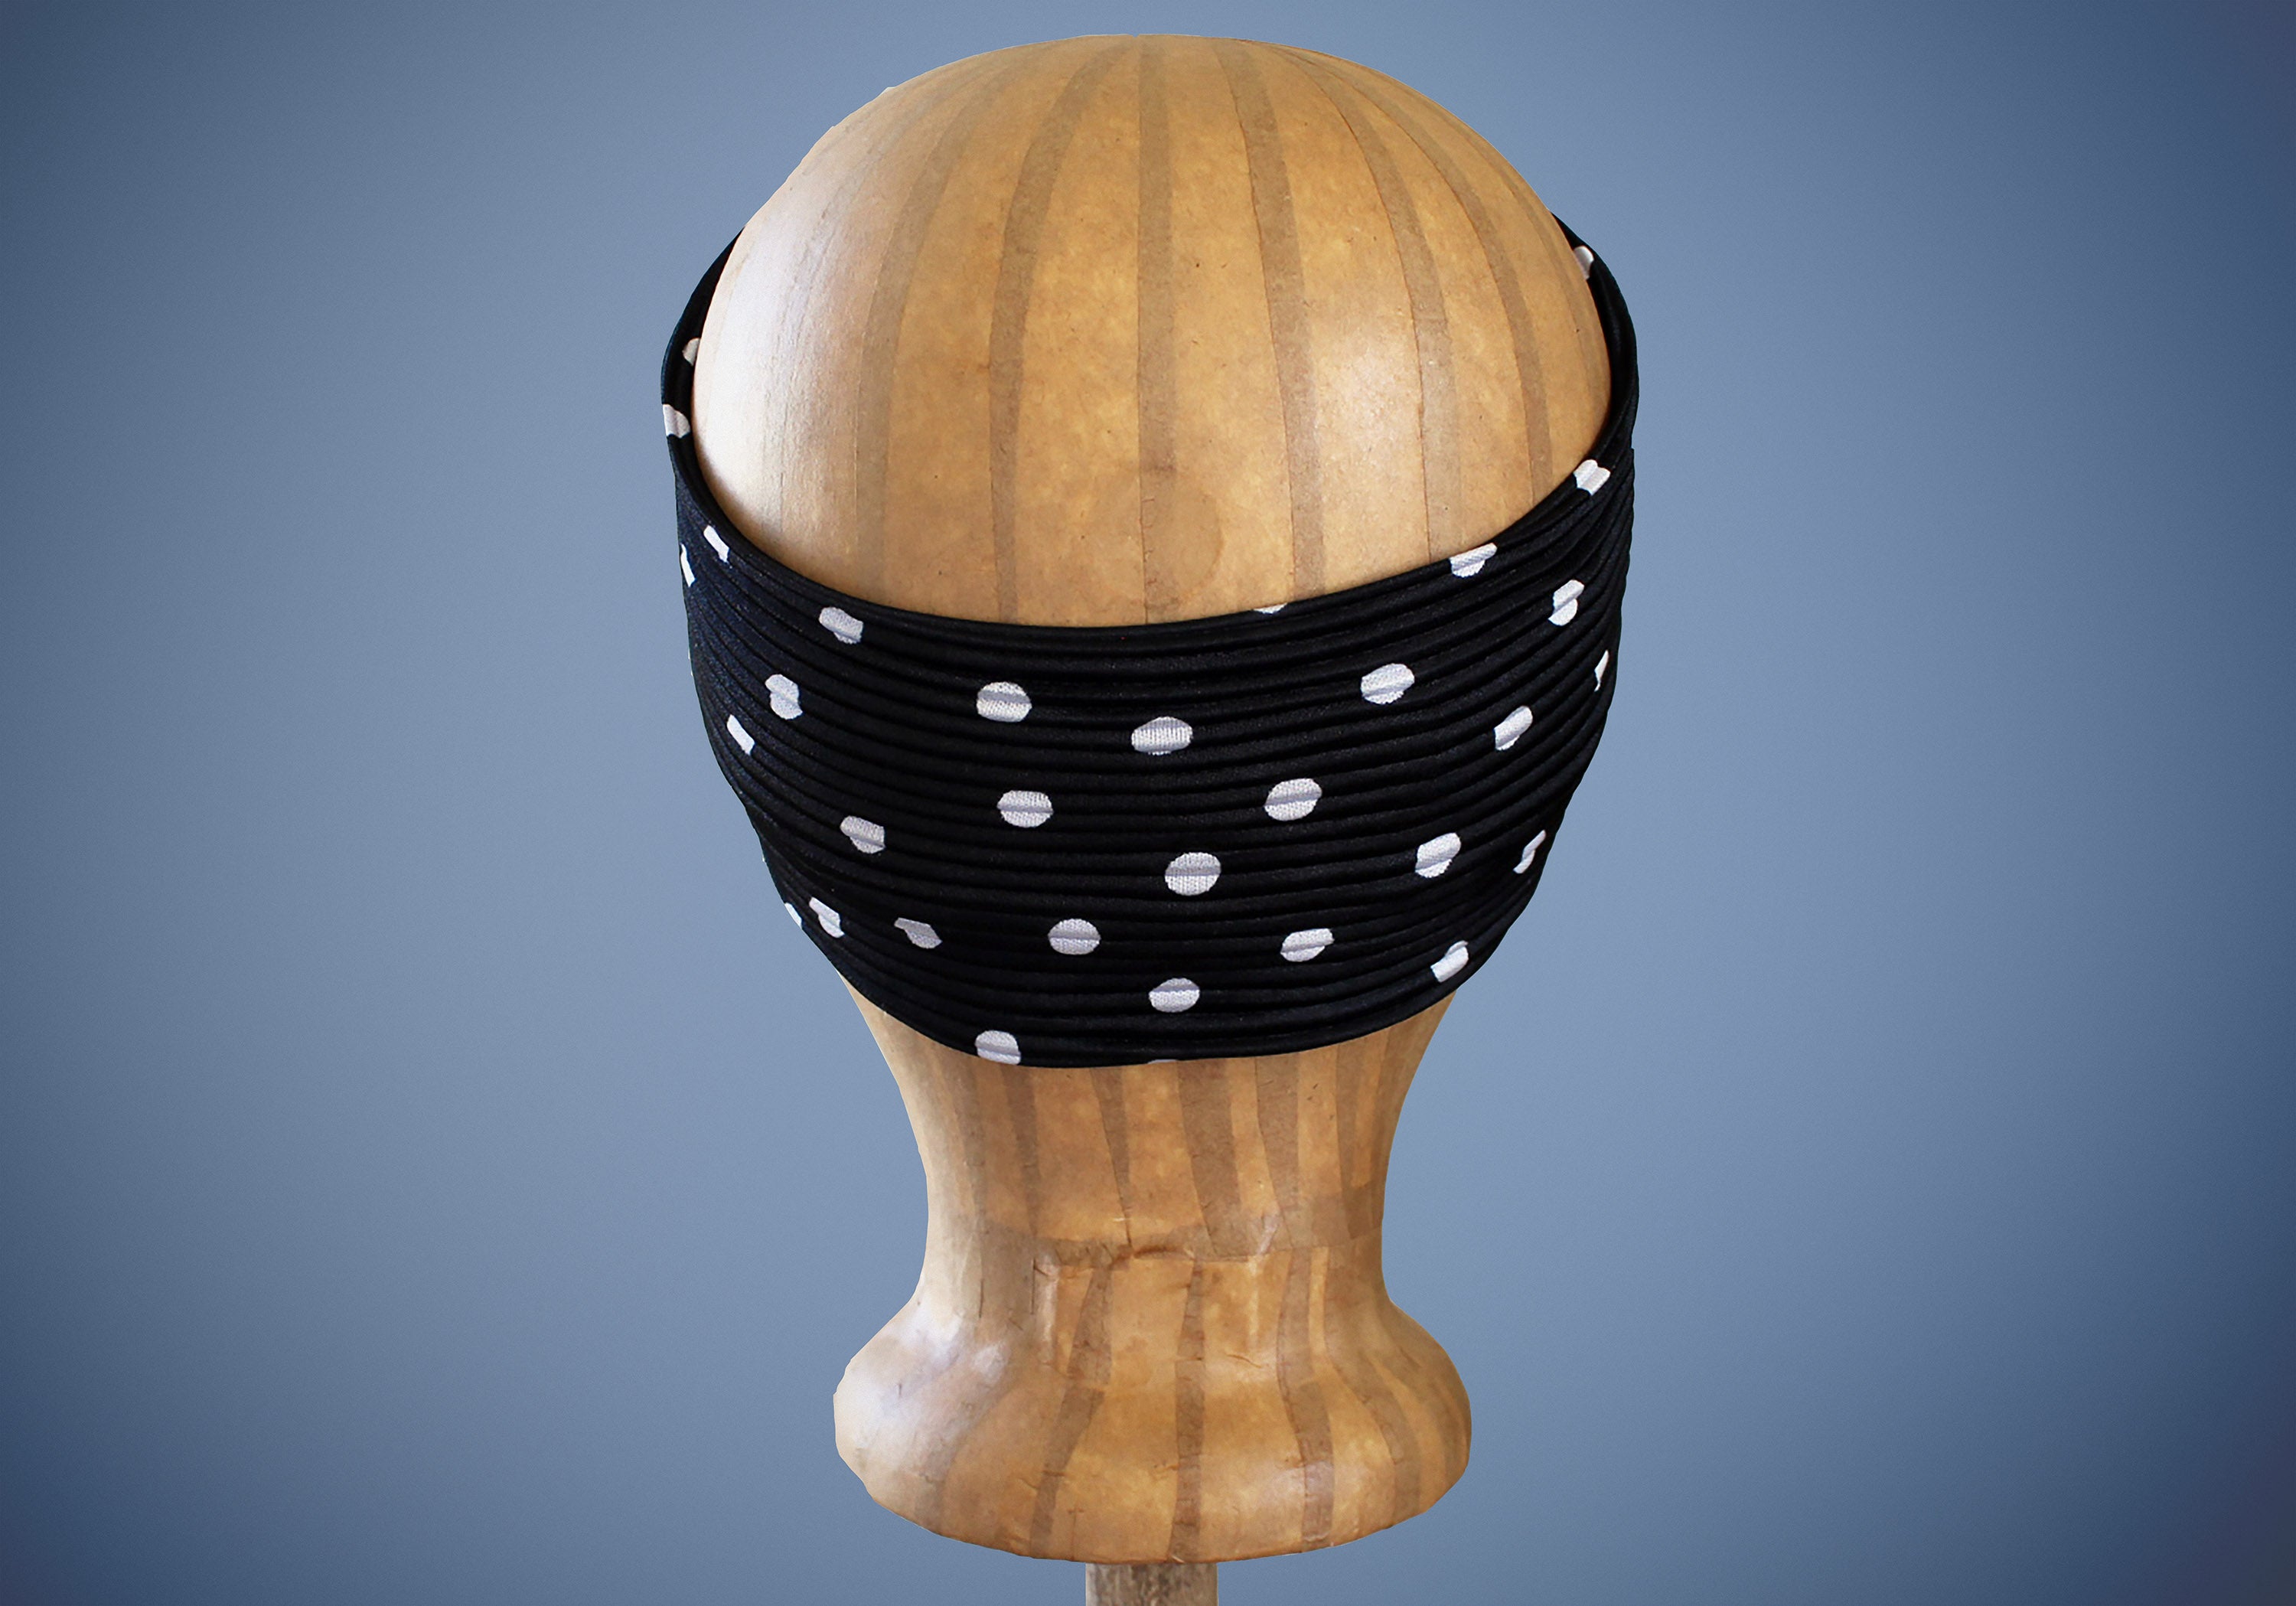 ARKWARD Black and white Polka Dot Turban Headband